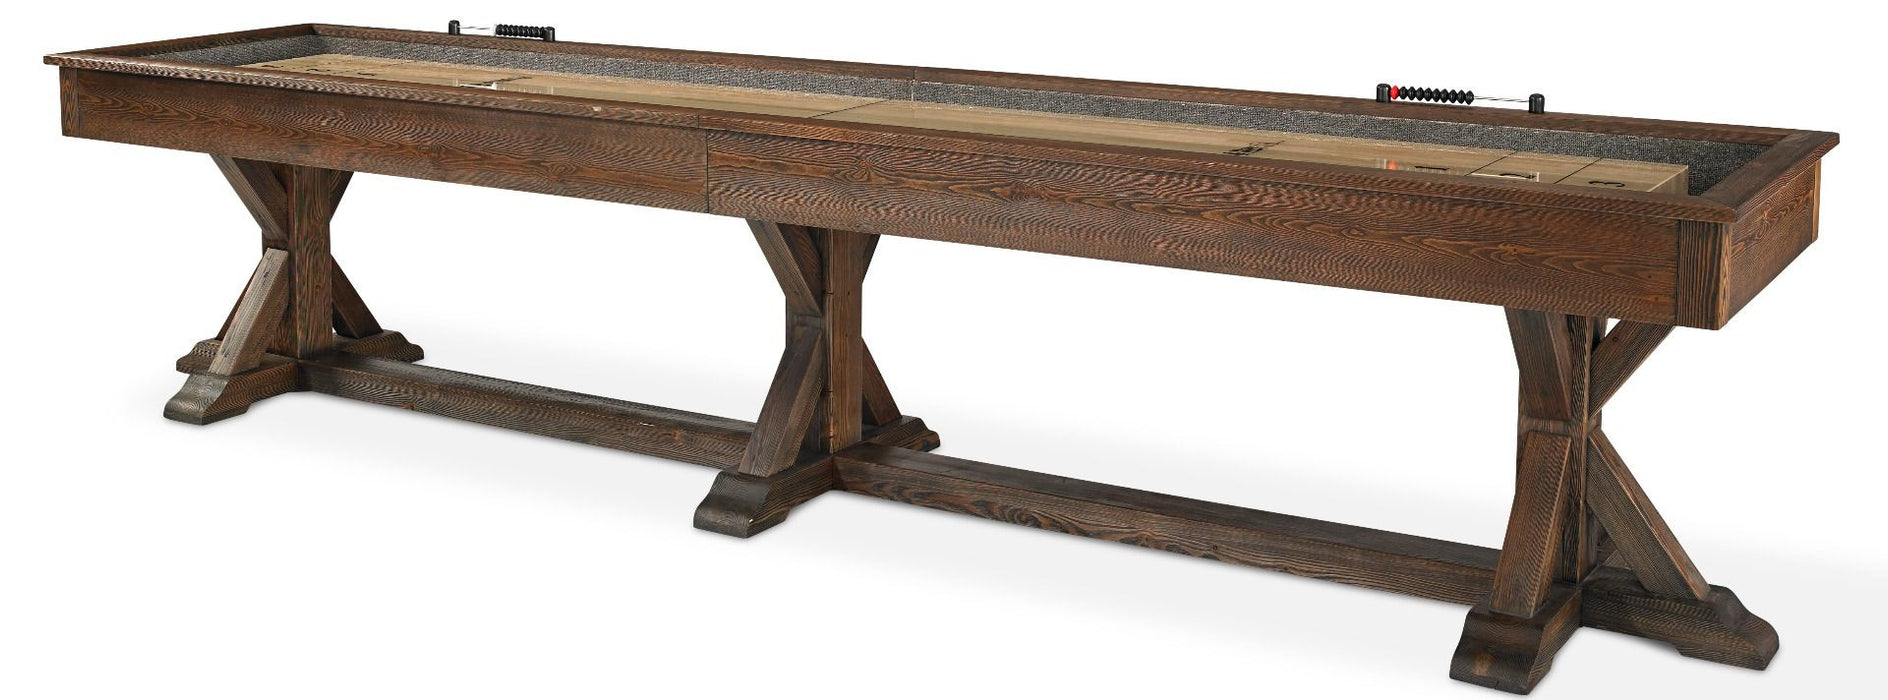 Plank and Hide Thomas Shuffleboard Table stock